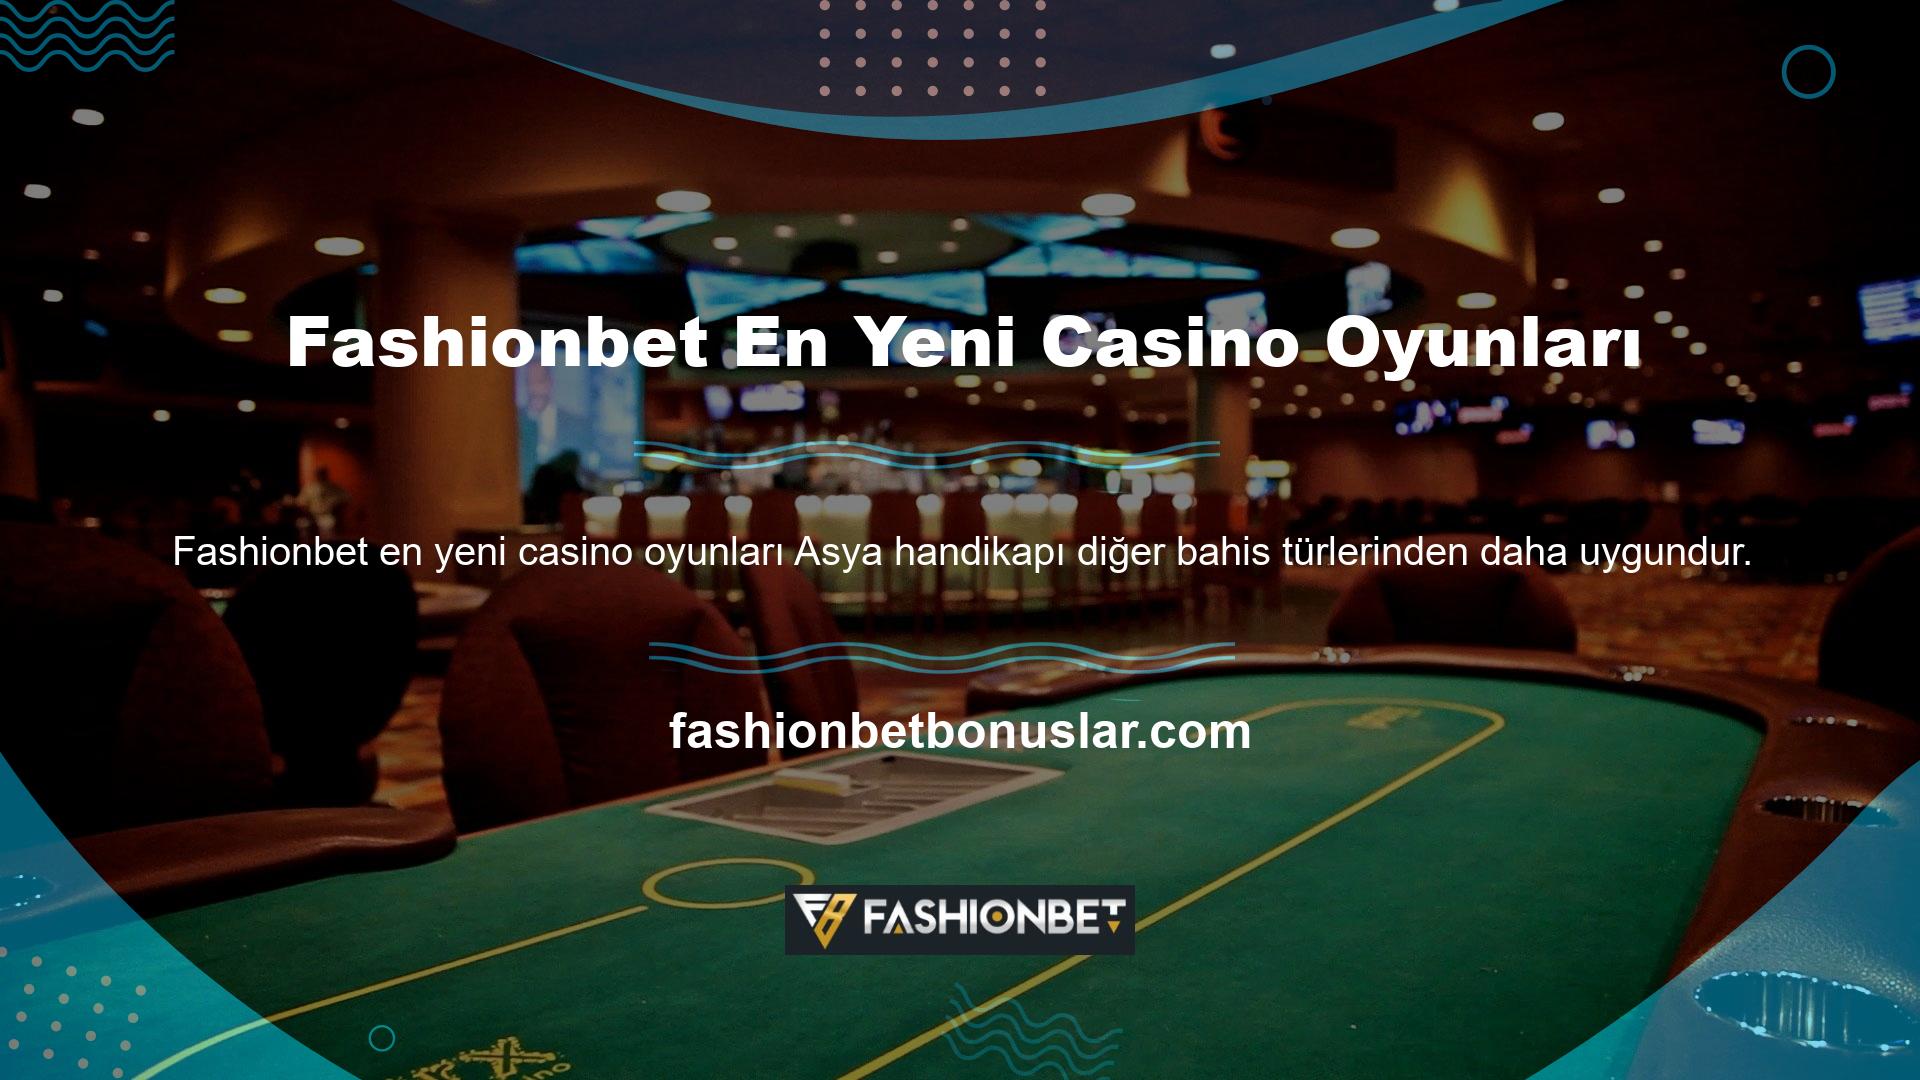 Fashionbet en yeni casino oyunları